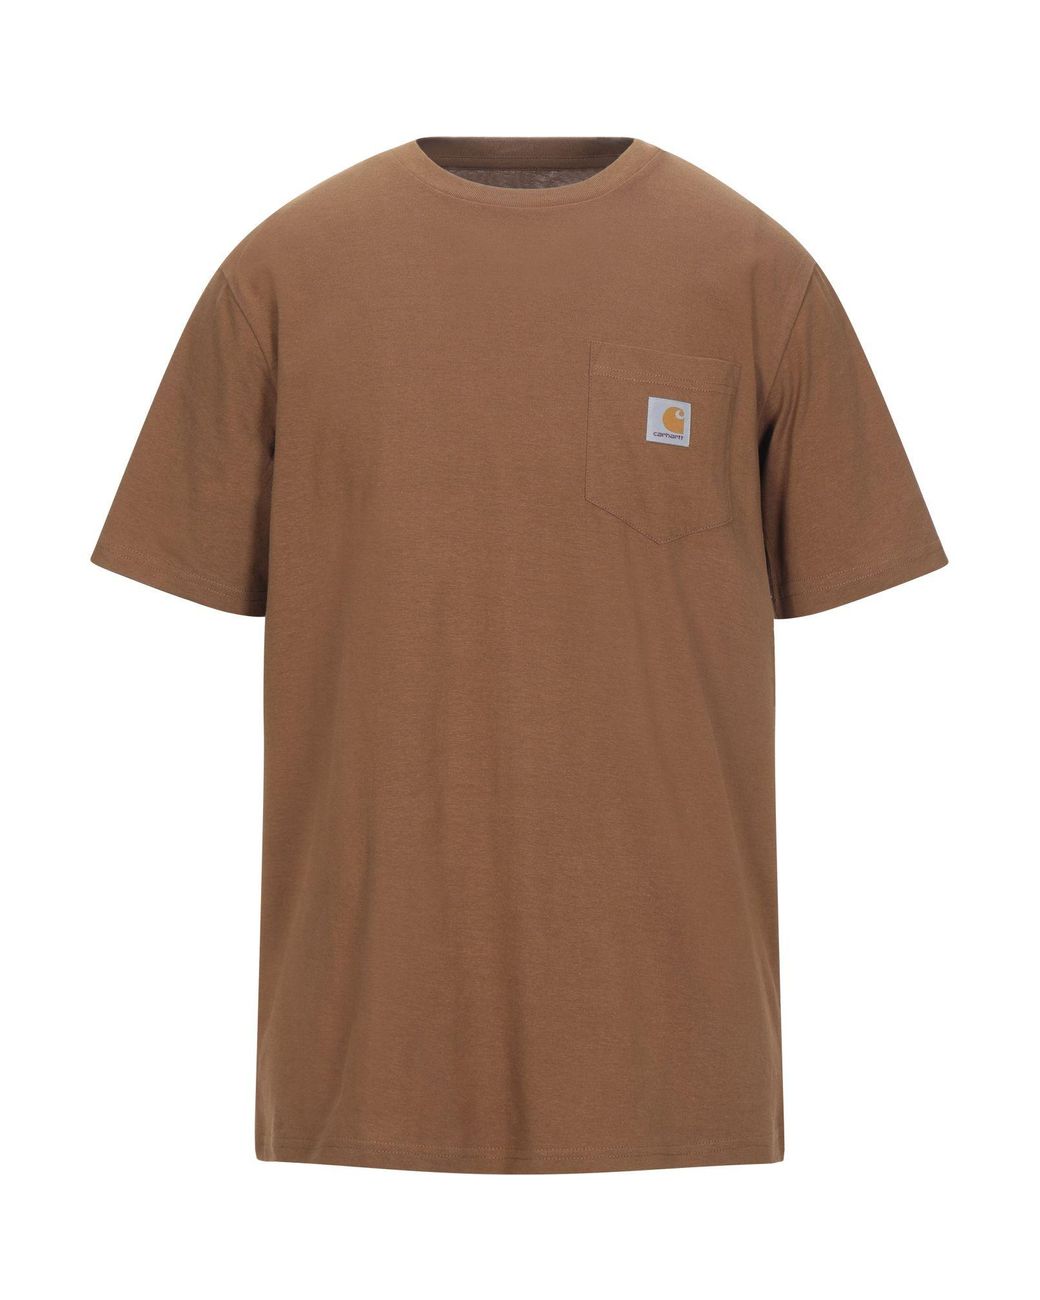 Carhartt Cotton T-shirt in Brown for Men - Lyst